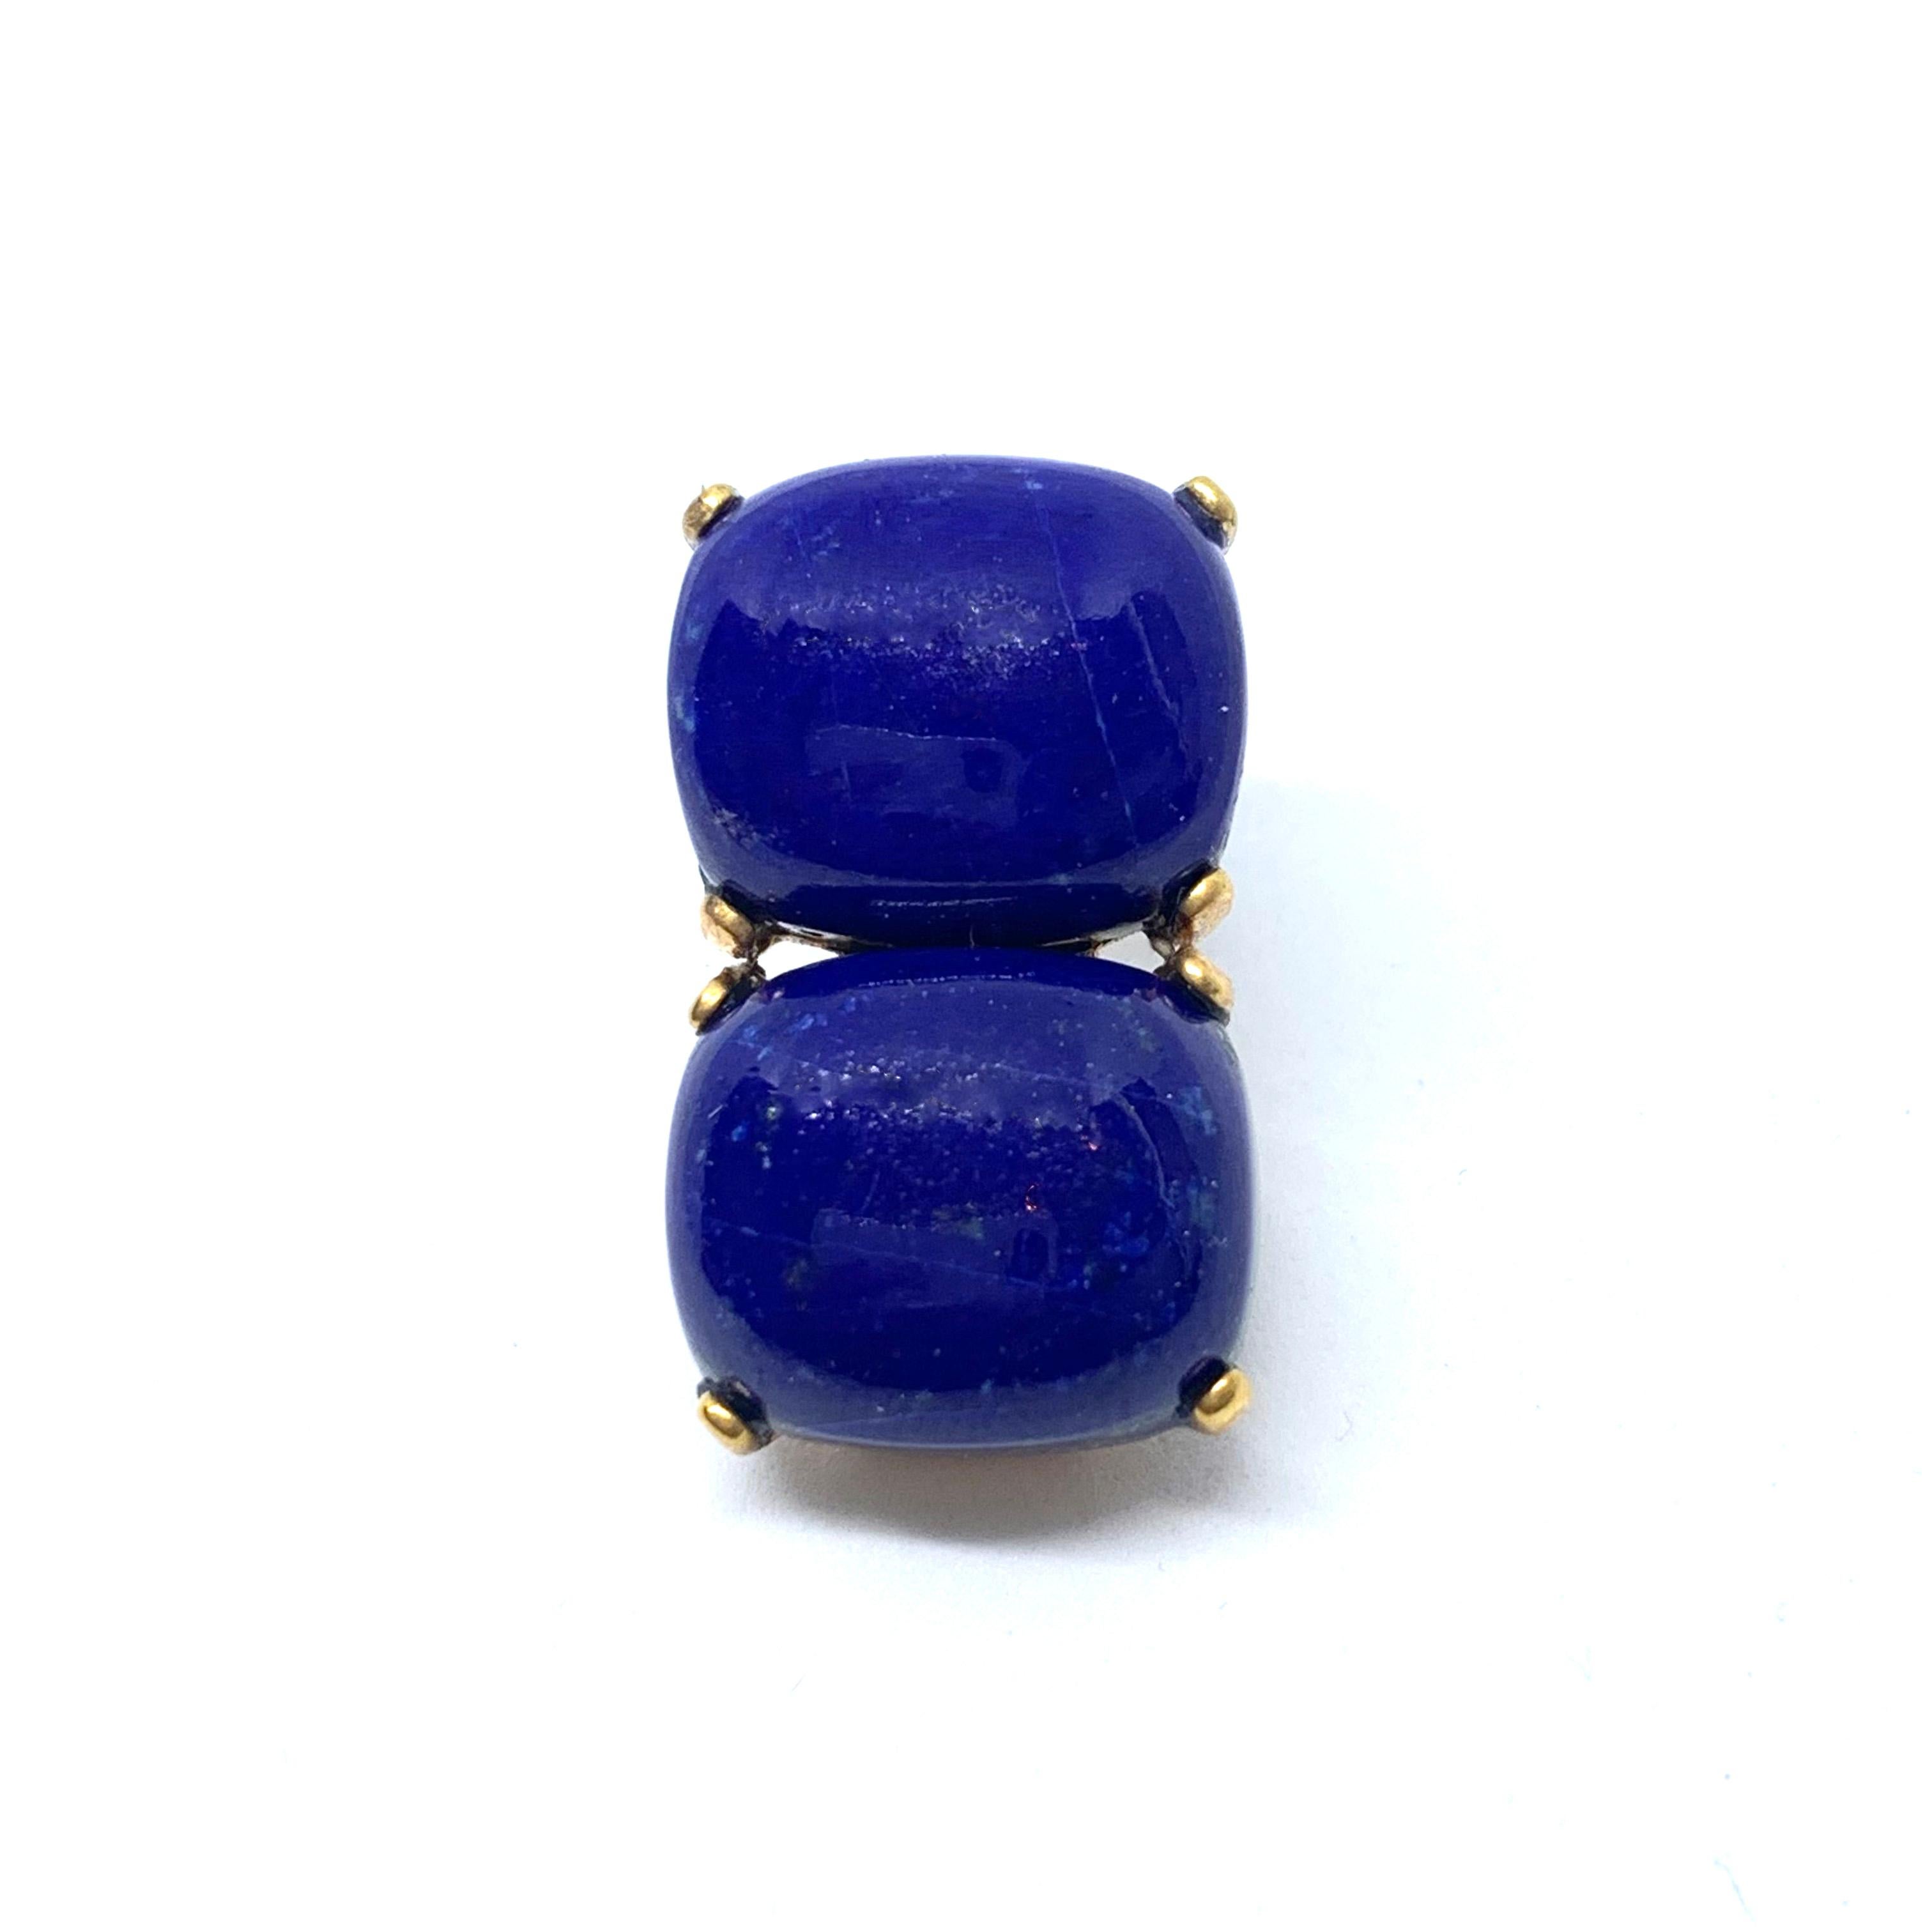 Artisan Stunning pair of Double Cushion Cabochon Lapis Lazuli Vermeil Earrings